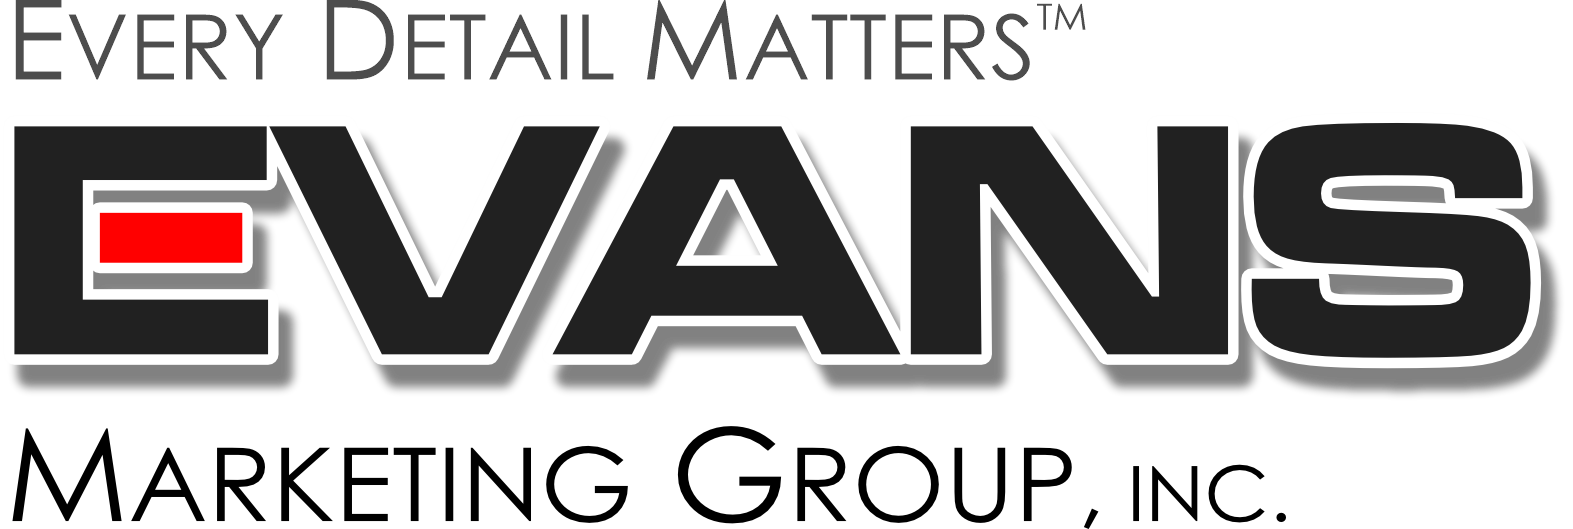 Evans Marketing Group, Inc.'s Logo